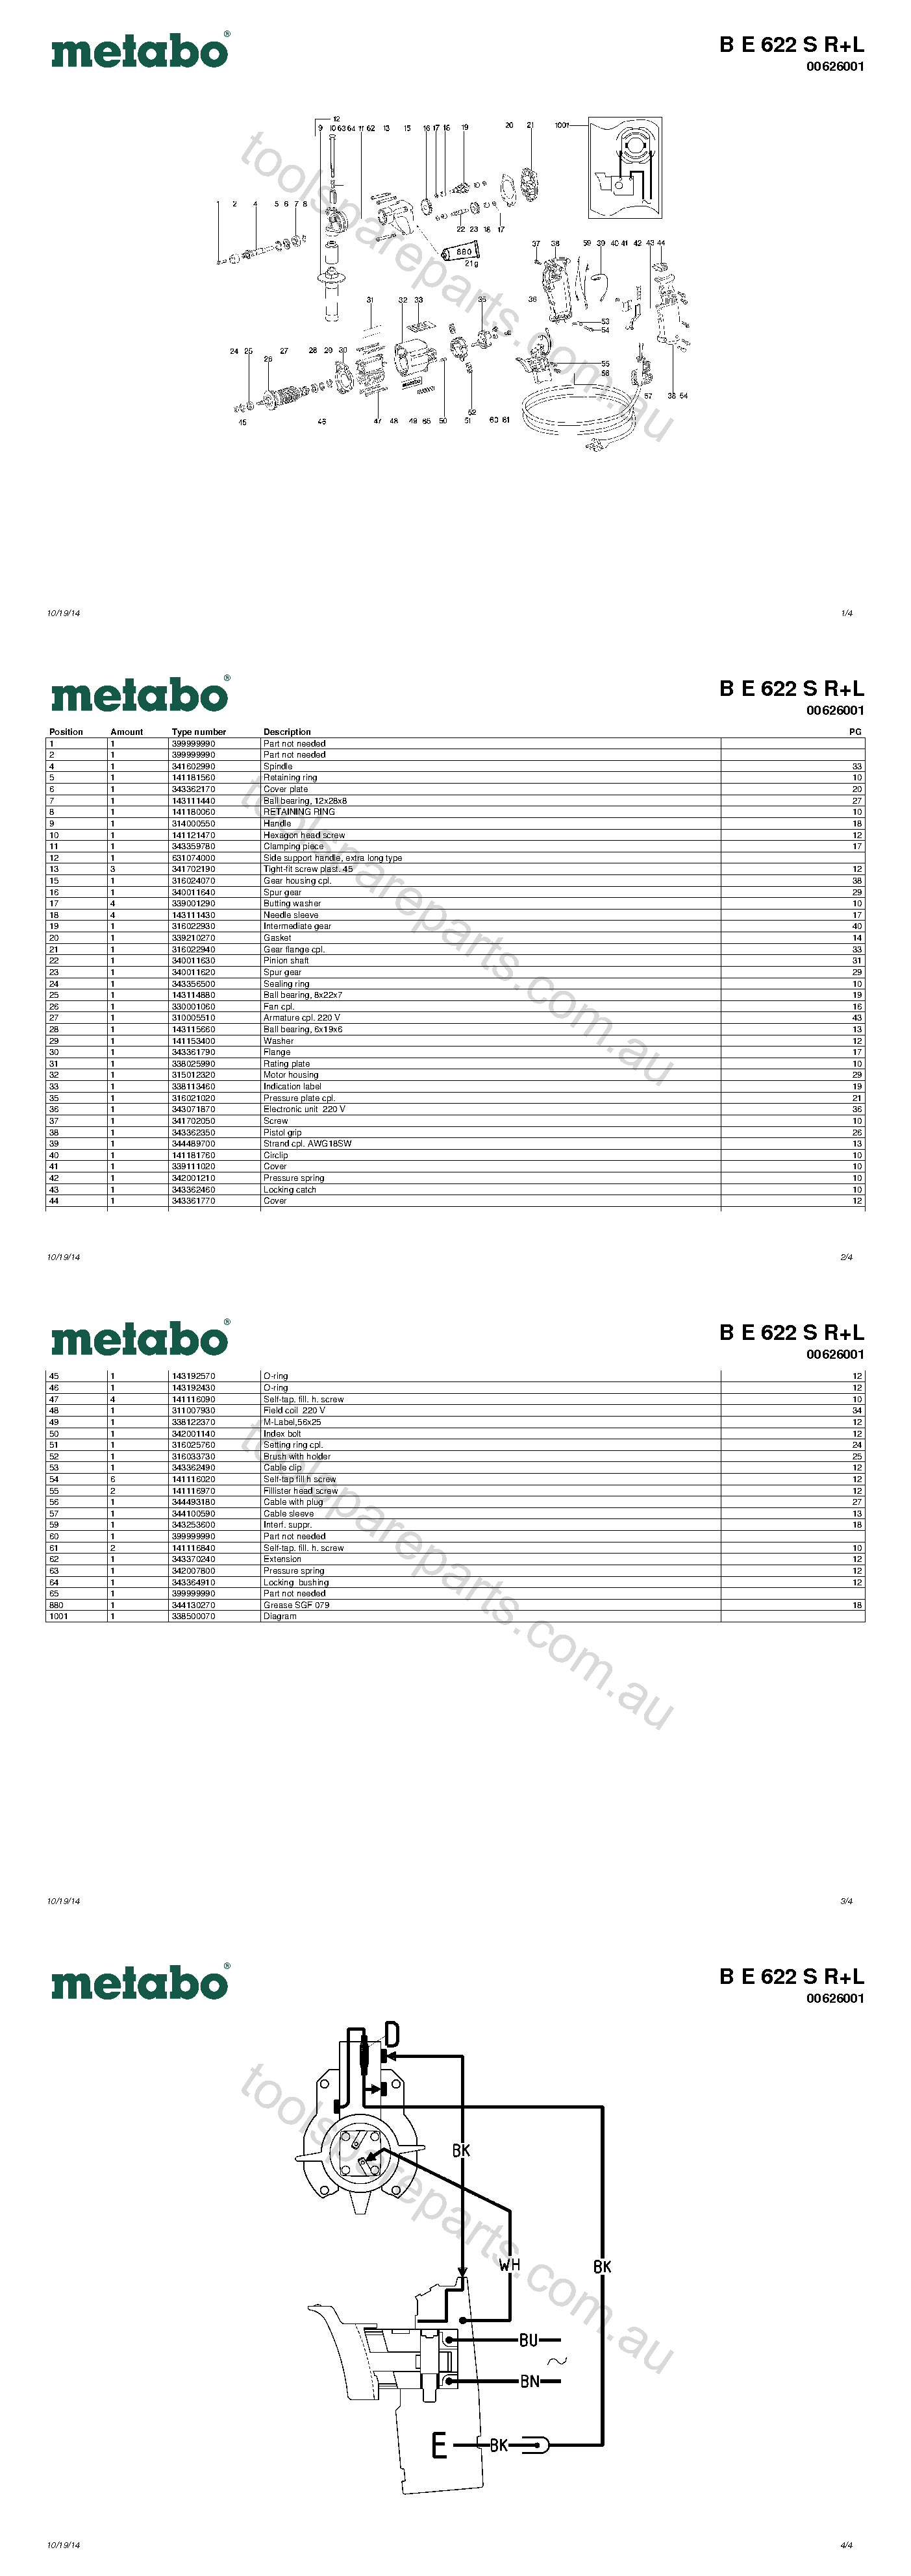 Metabo B E 622 S R+L 00626001  Diagram 1